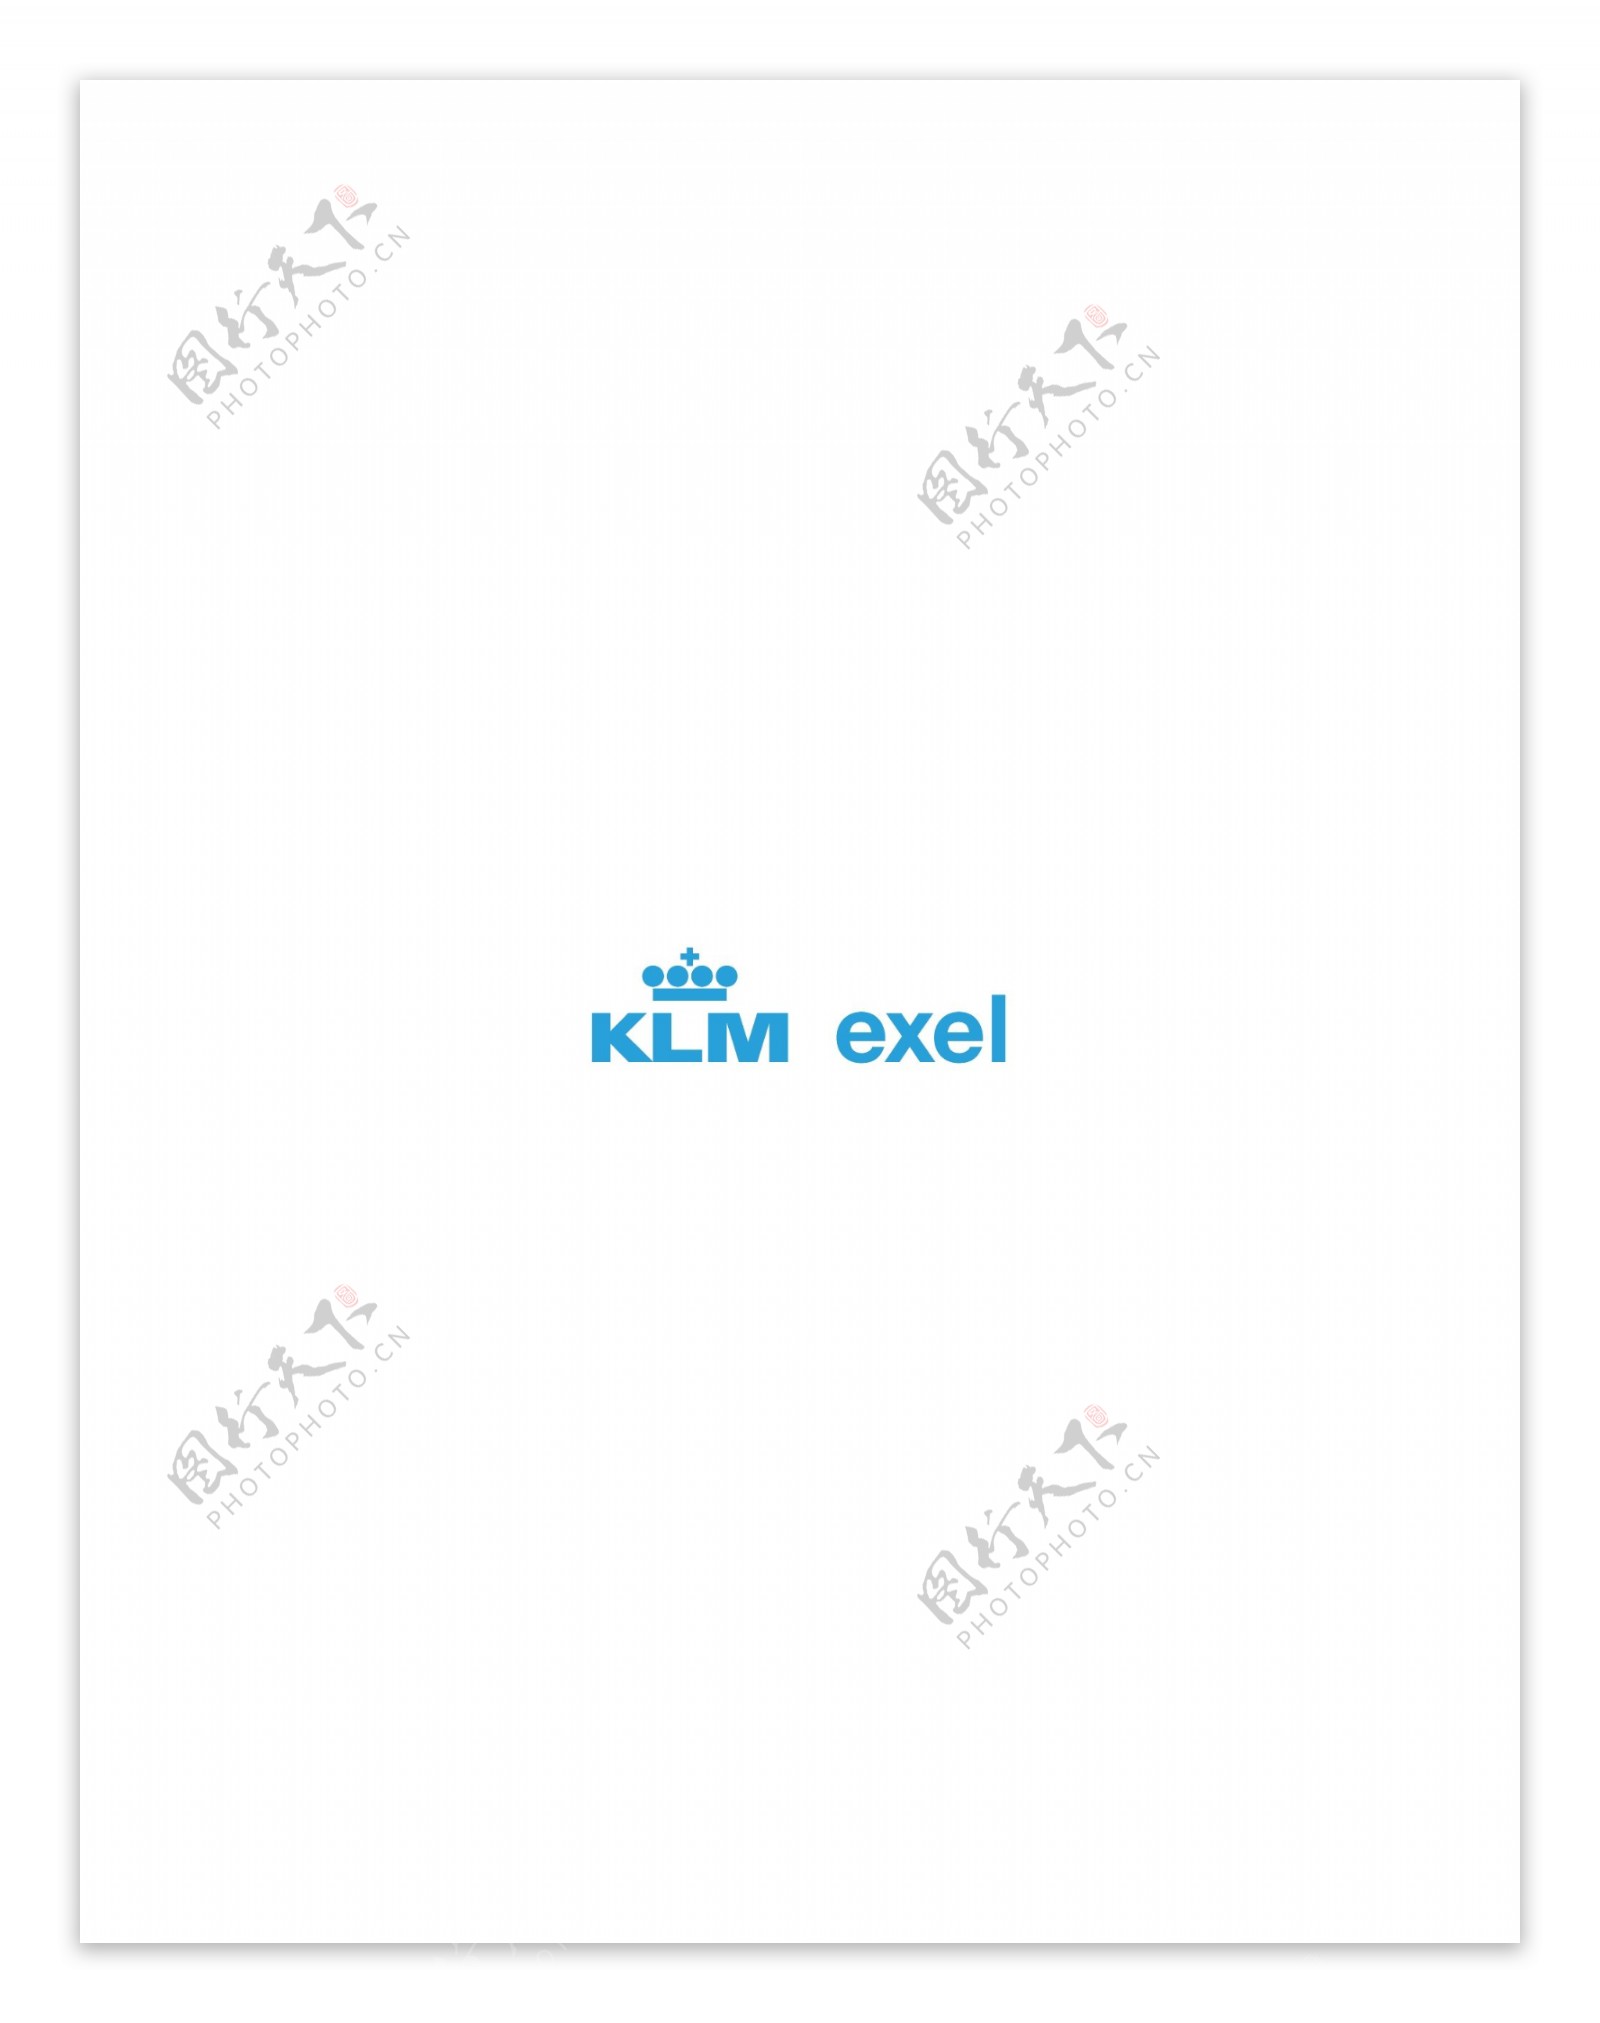 KLMExellogo设计欣赏KLMExel民航业标志下载标志设计欣赏